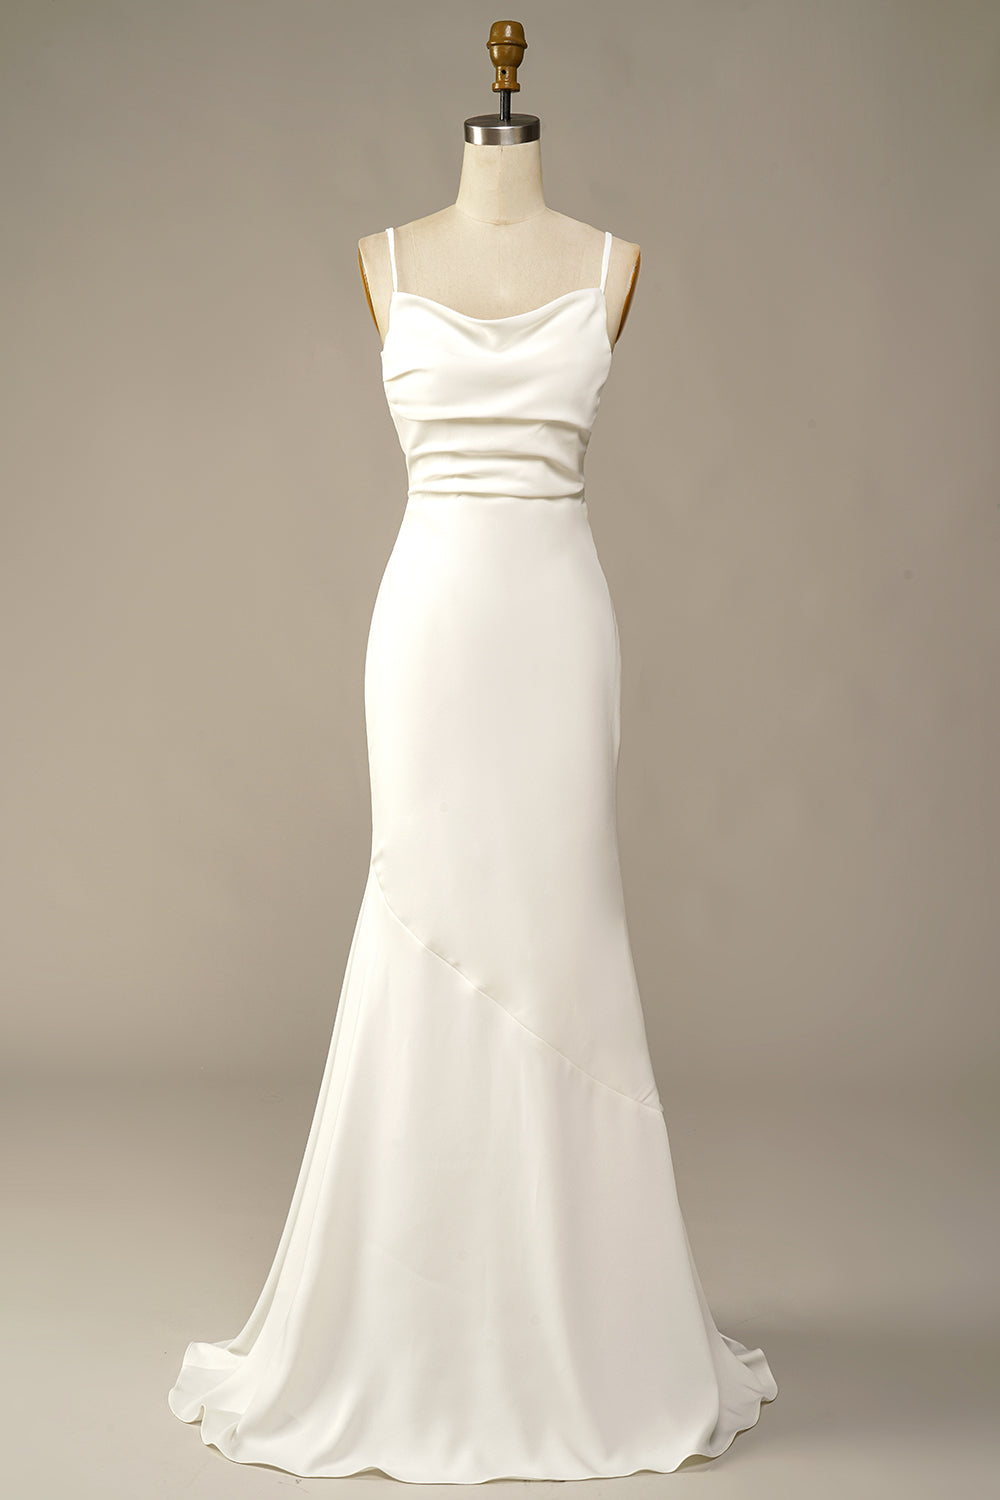 White Mermaid Long Corset Wedding Dress outfit, Wedding Dresses Long Sleeves